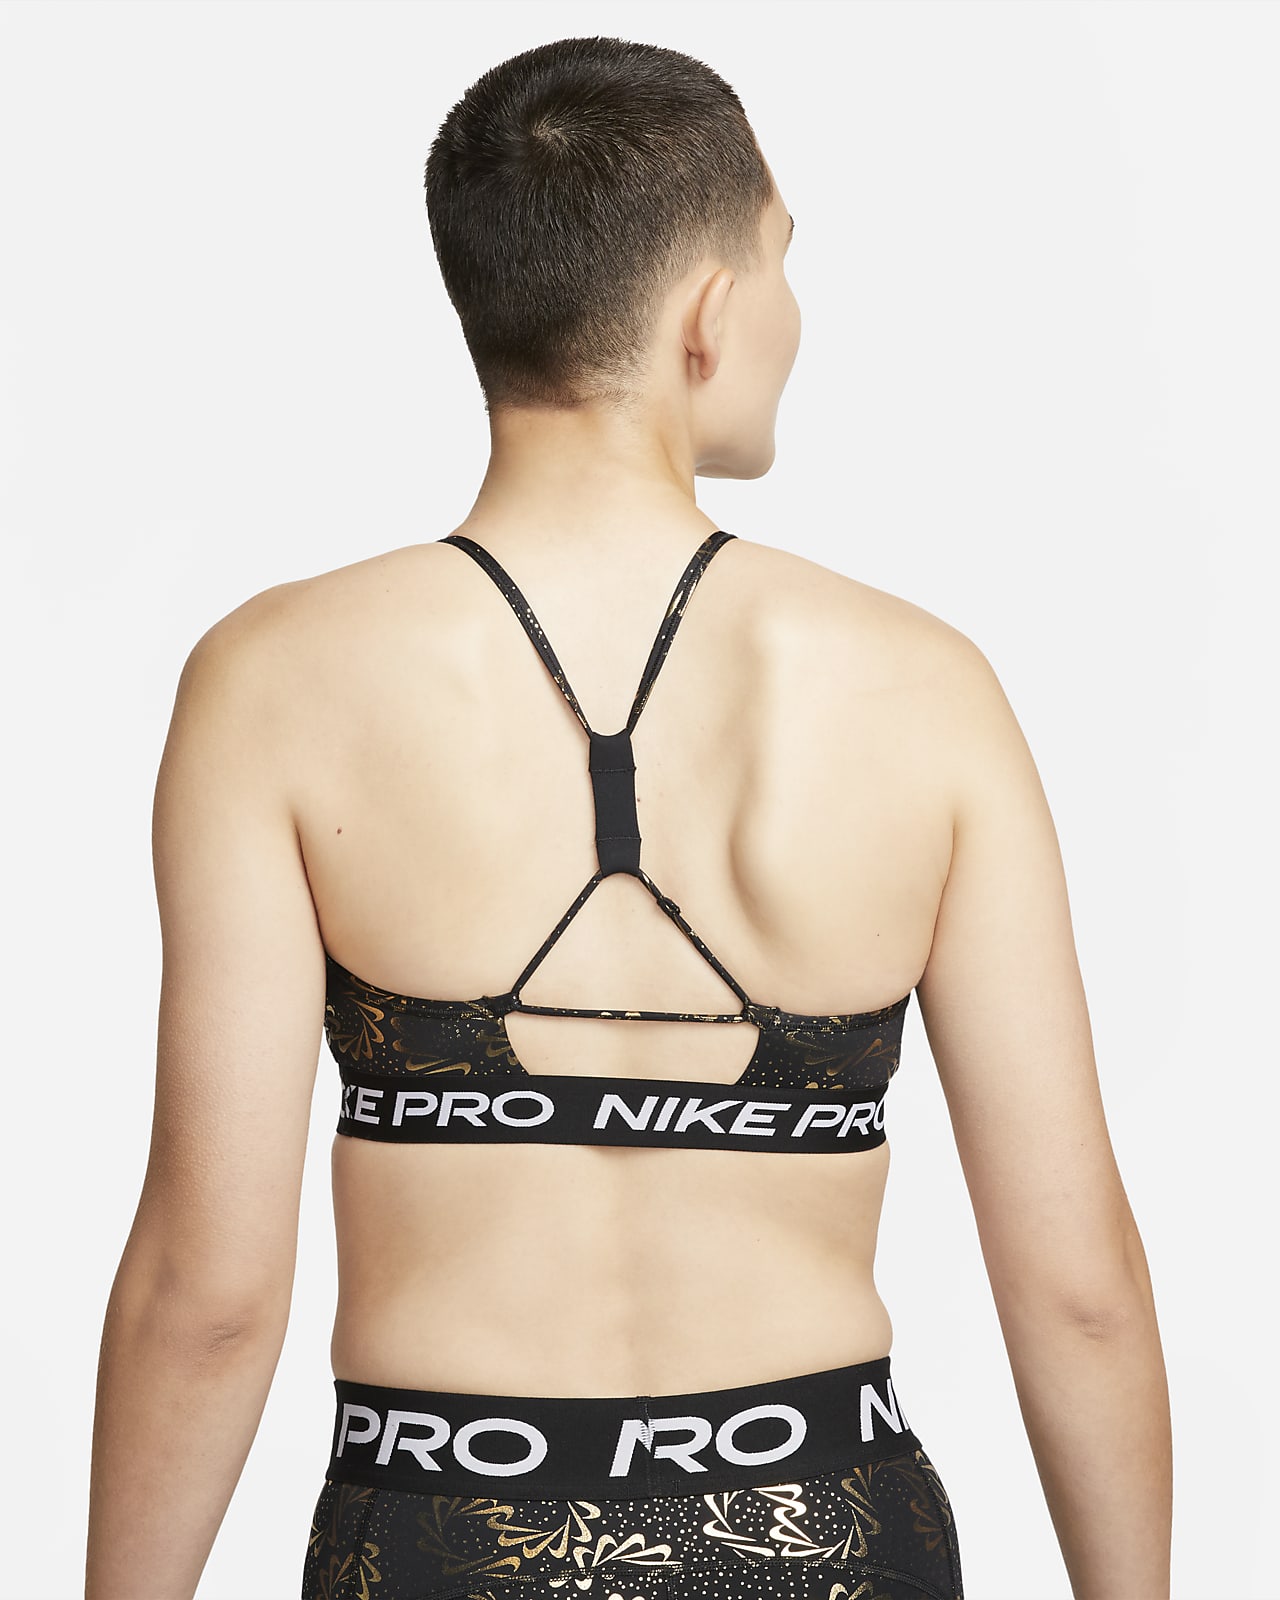 Nike Dri-FIT Indy Women s Light-Support Padded Glitter Sports Bra 